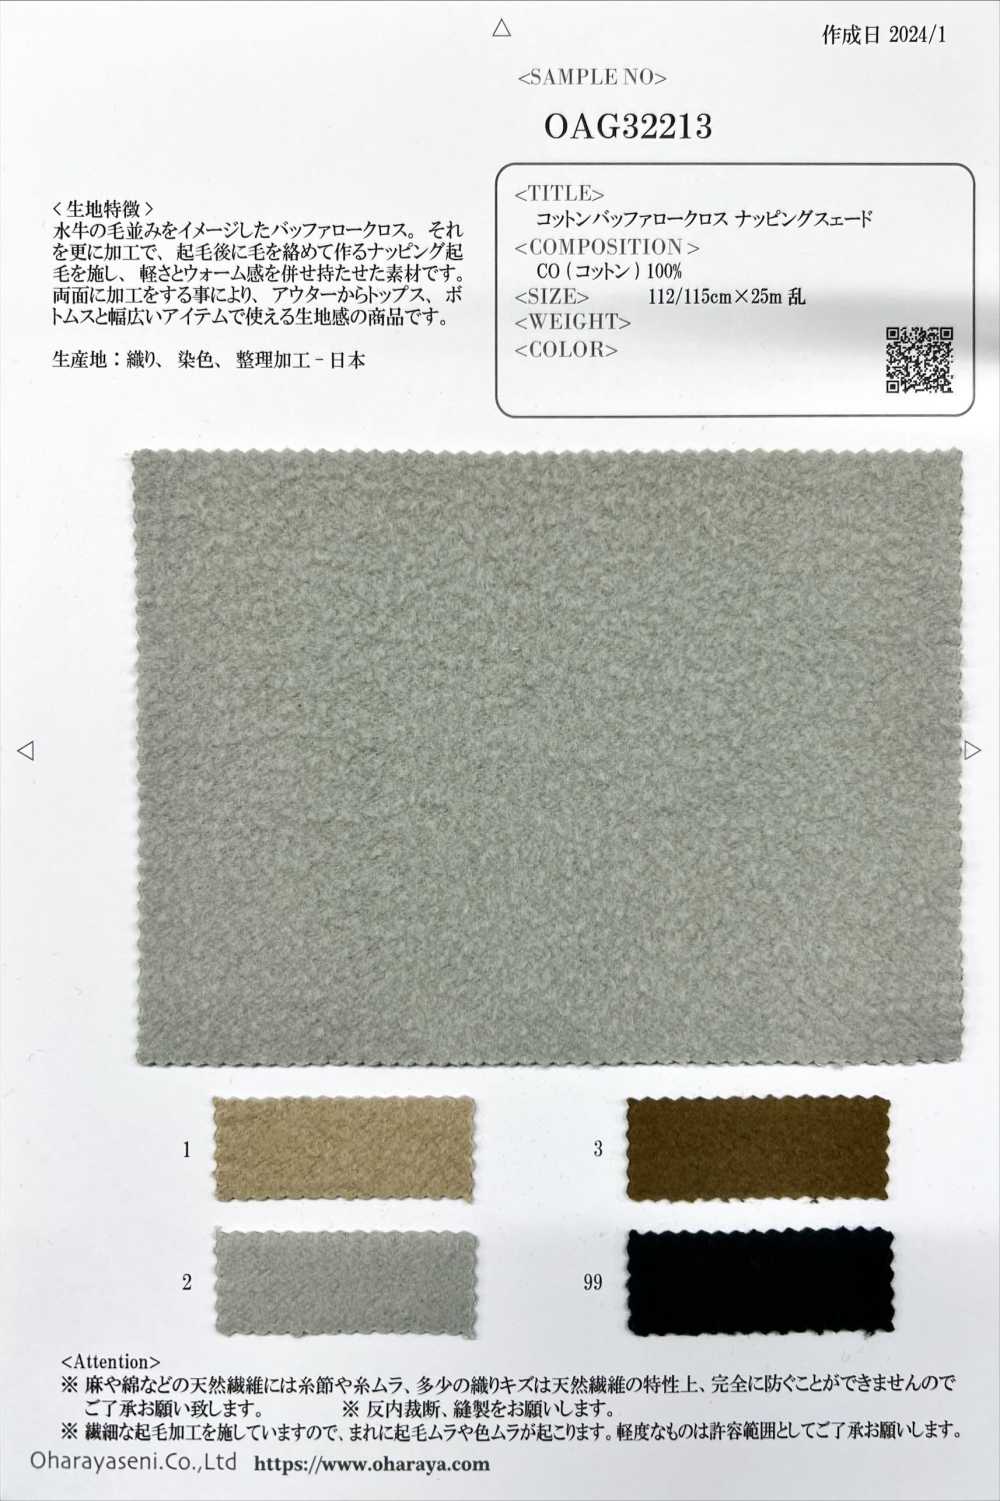 OAG32213 Baumwolle Büffelstoff Rauleder[Textilgewebe] Oharayaseni